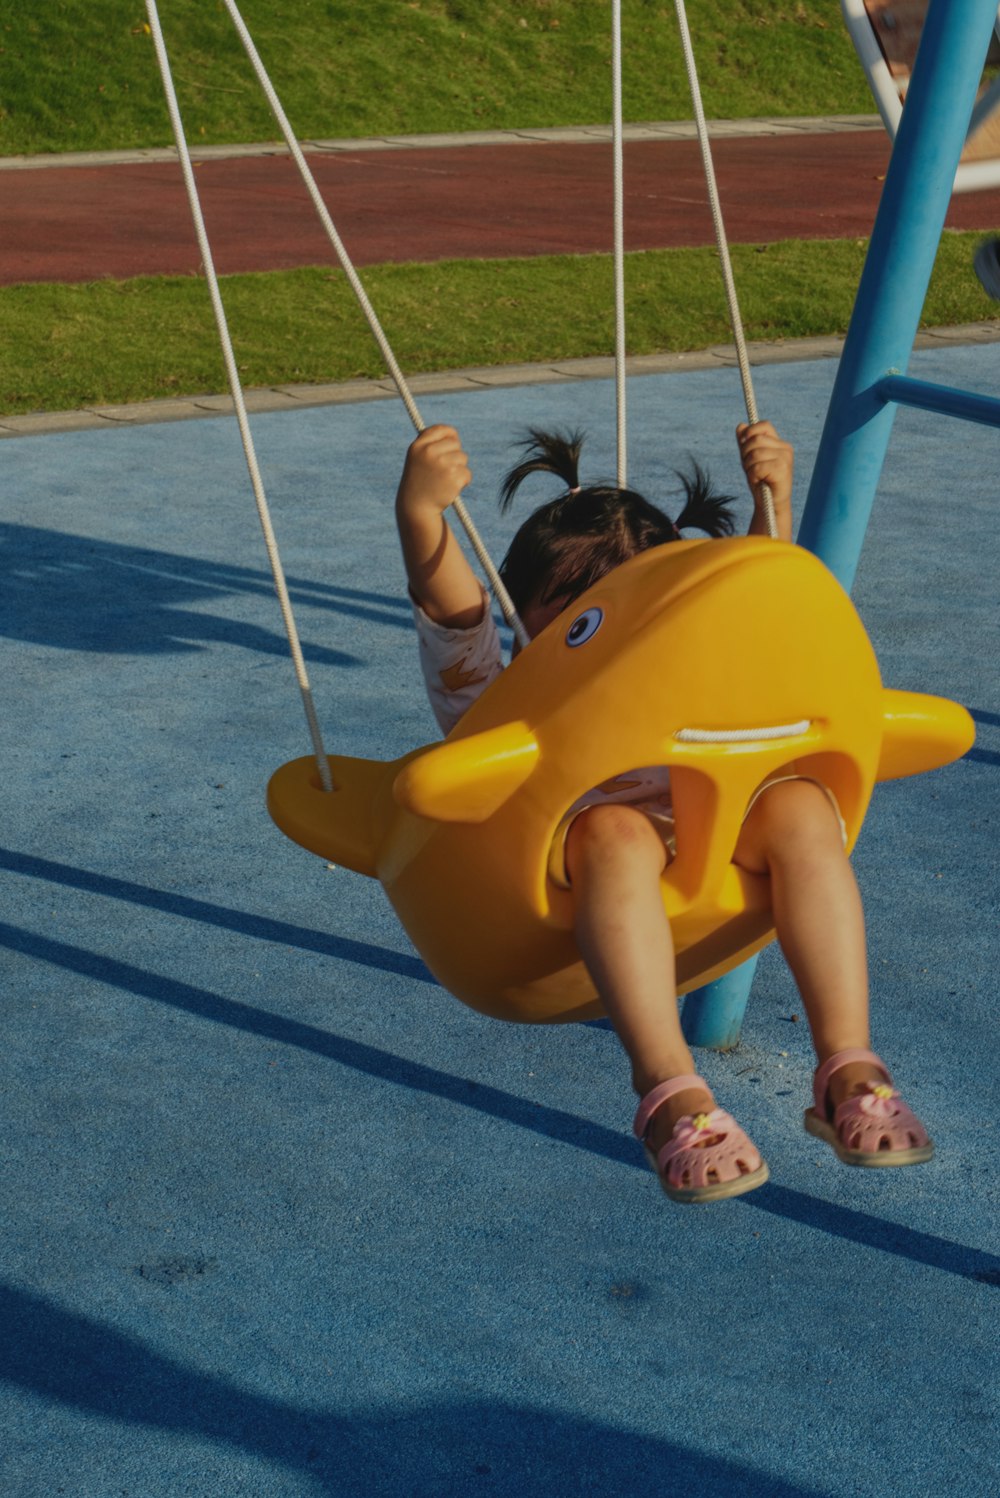 girl in yellow shirt riding yellow swing